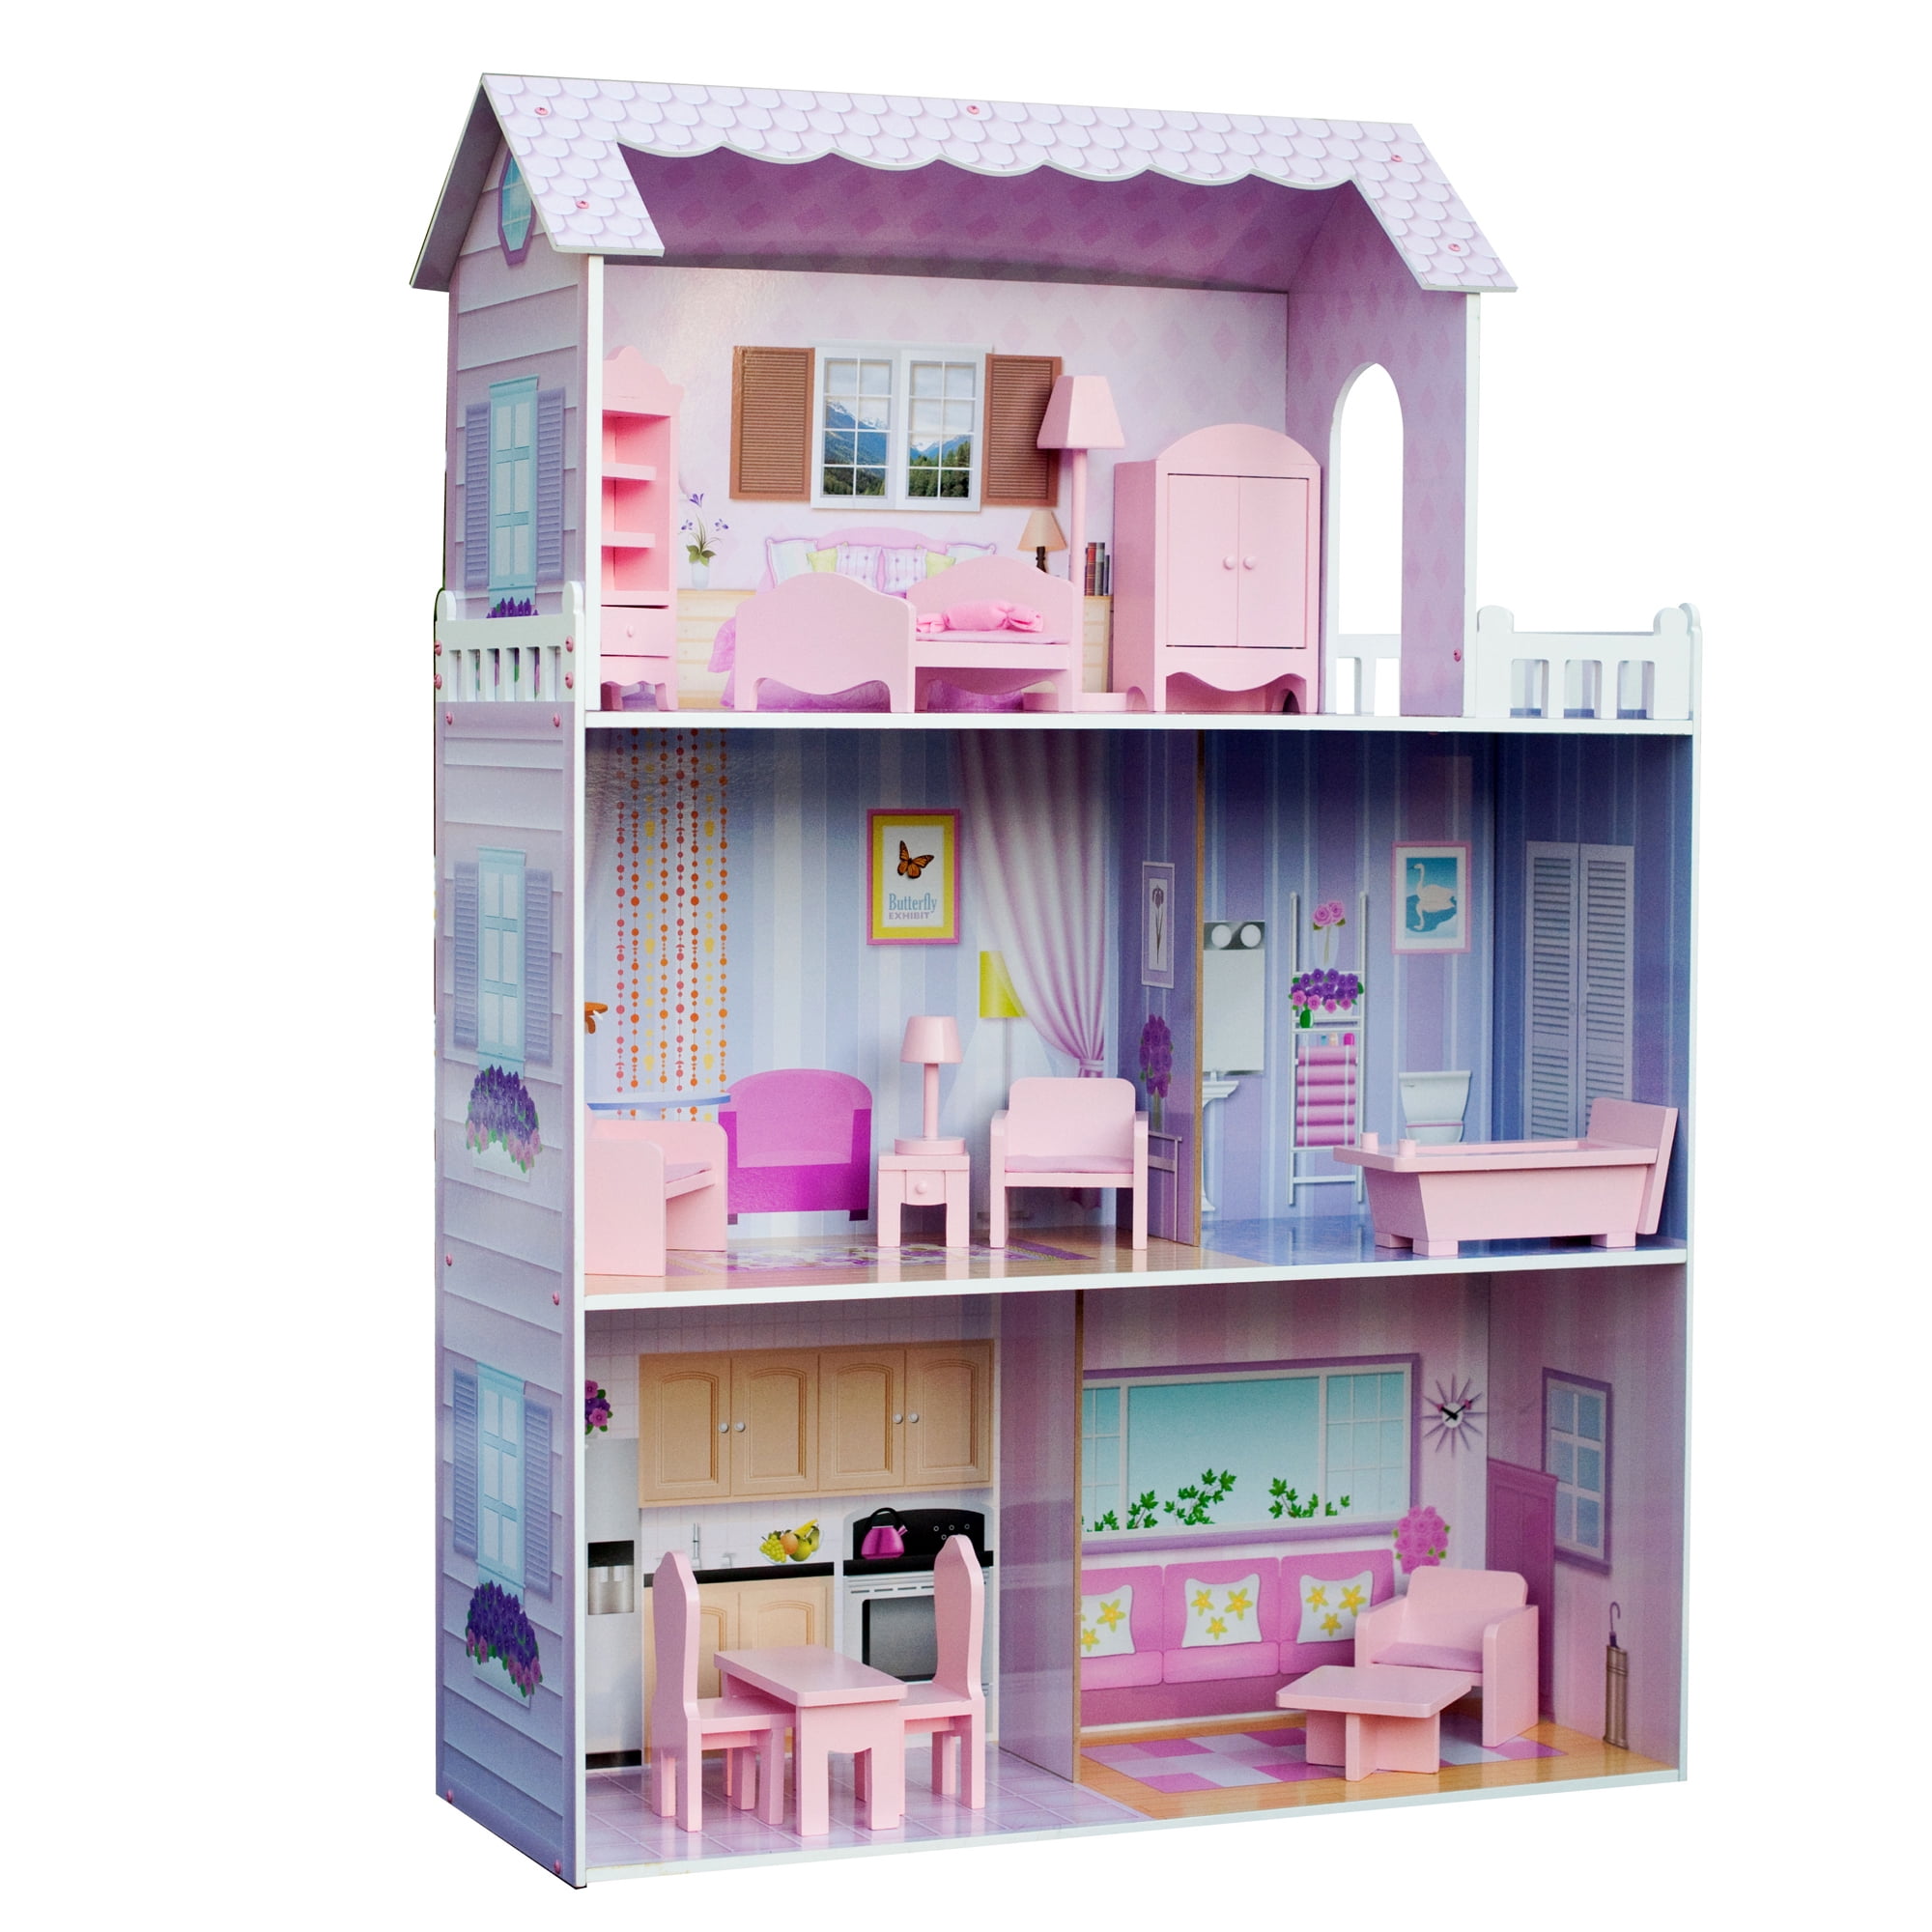 1:12 dollhouse 迷你娃娃屋 迷你家具袖珍 DIY木房子-阿里巴巴